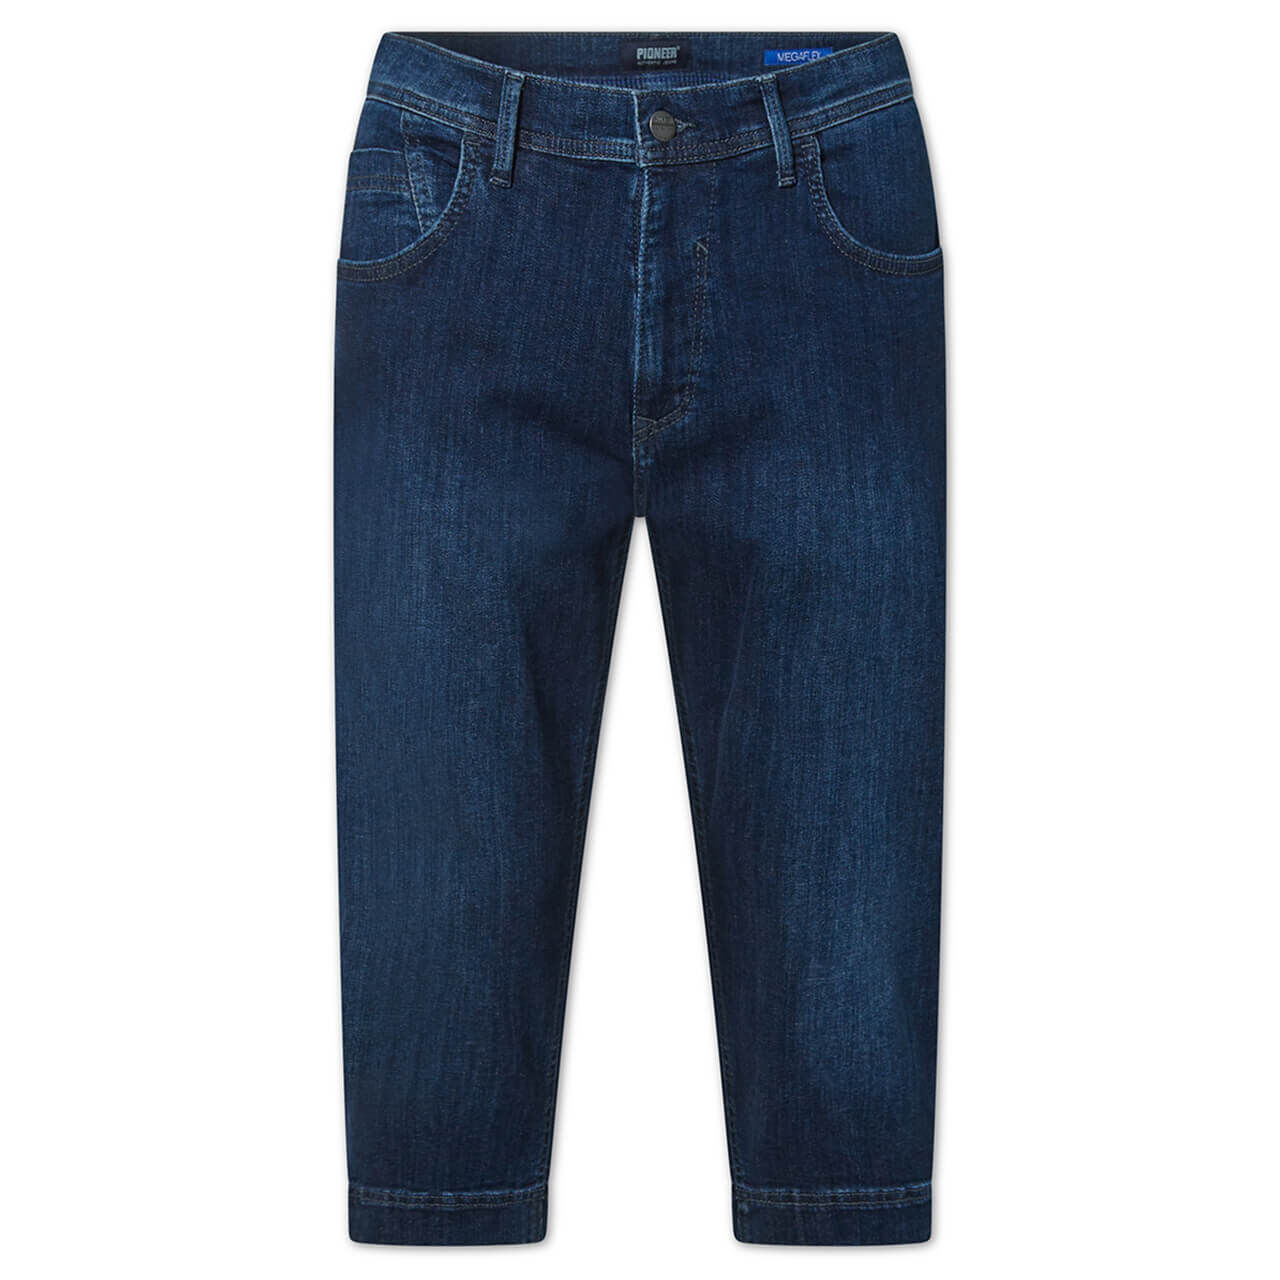 Pioneer Bill 3/4 Jeans Megaflex dark blue used